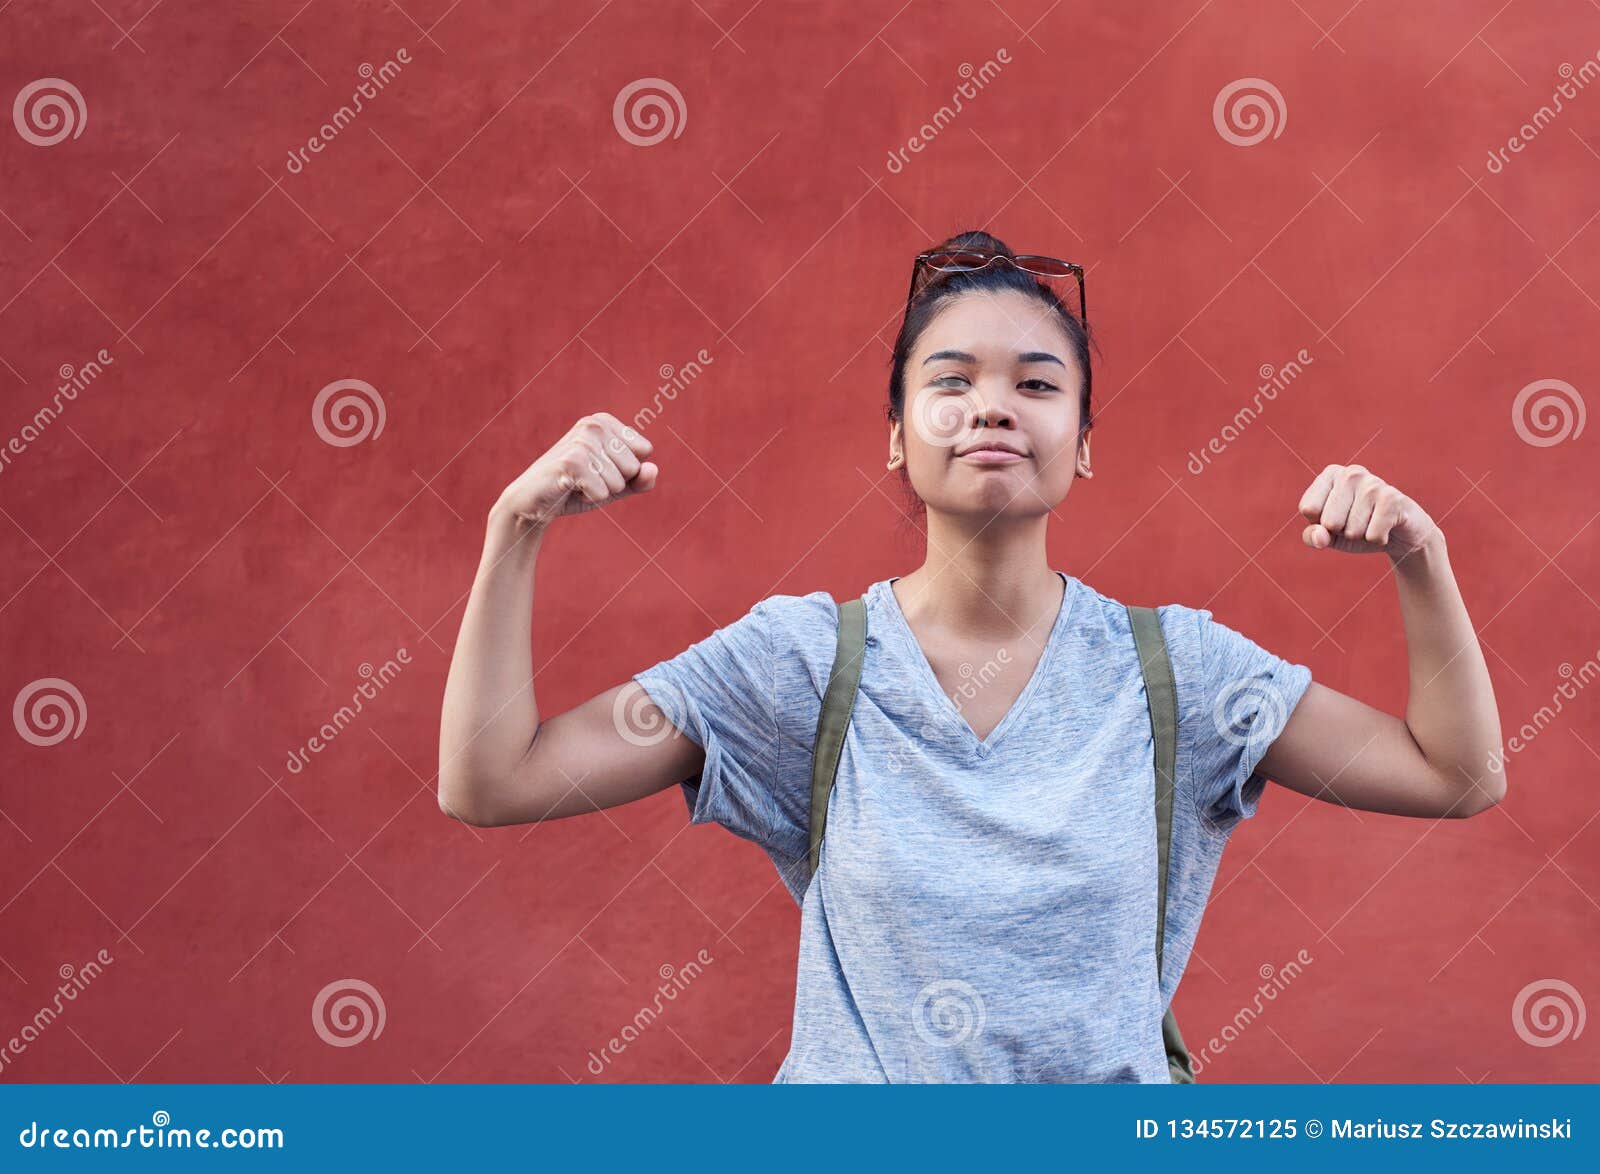 asian girls flexing biceps gallerie